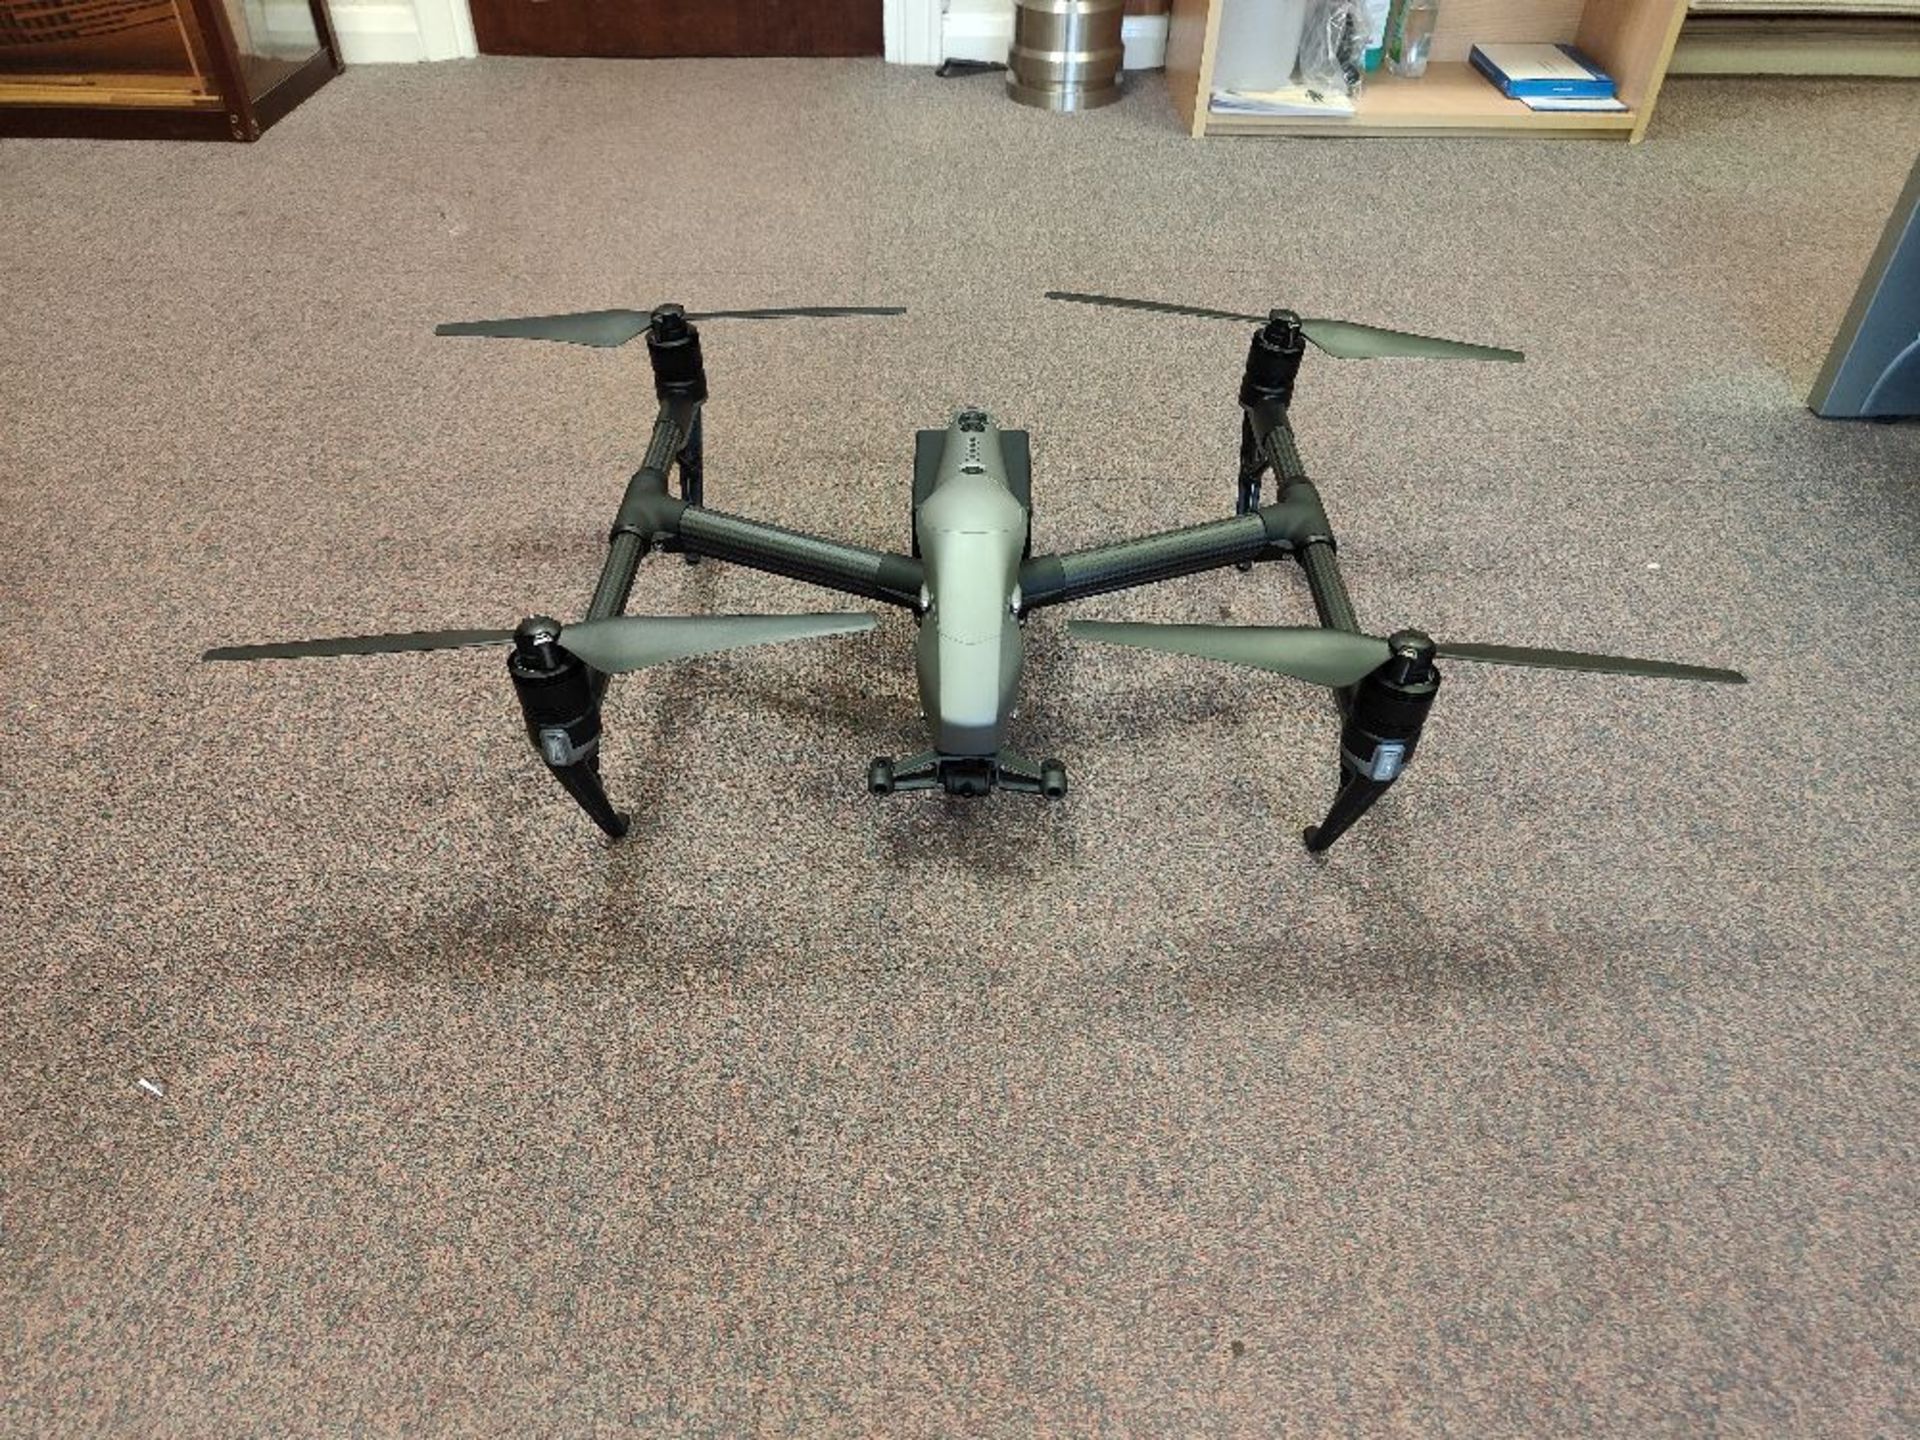 DJI Inspire 2 Drone w/ DJI Zenmuse X5s and Accessories